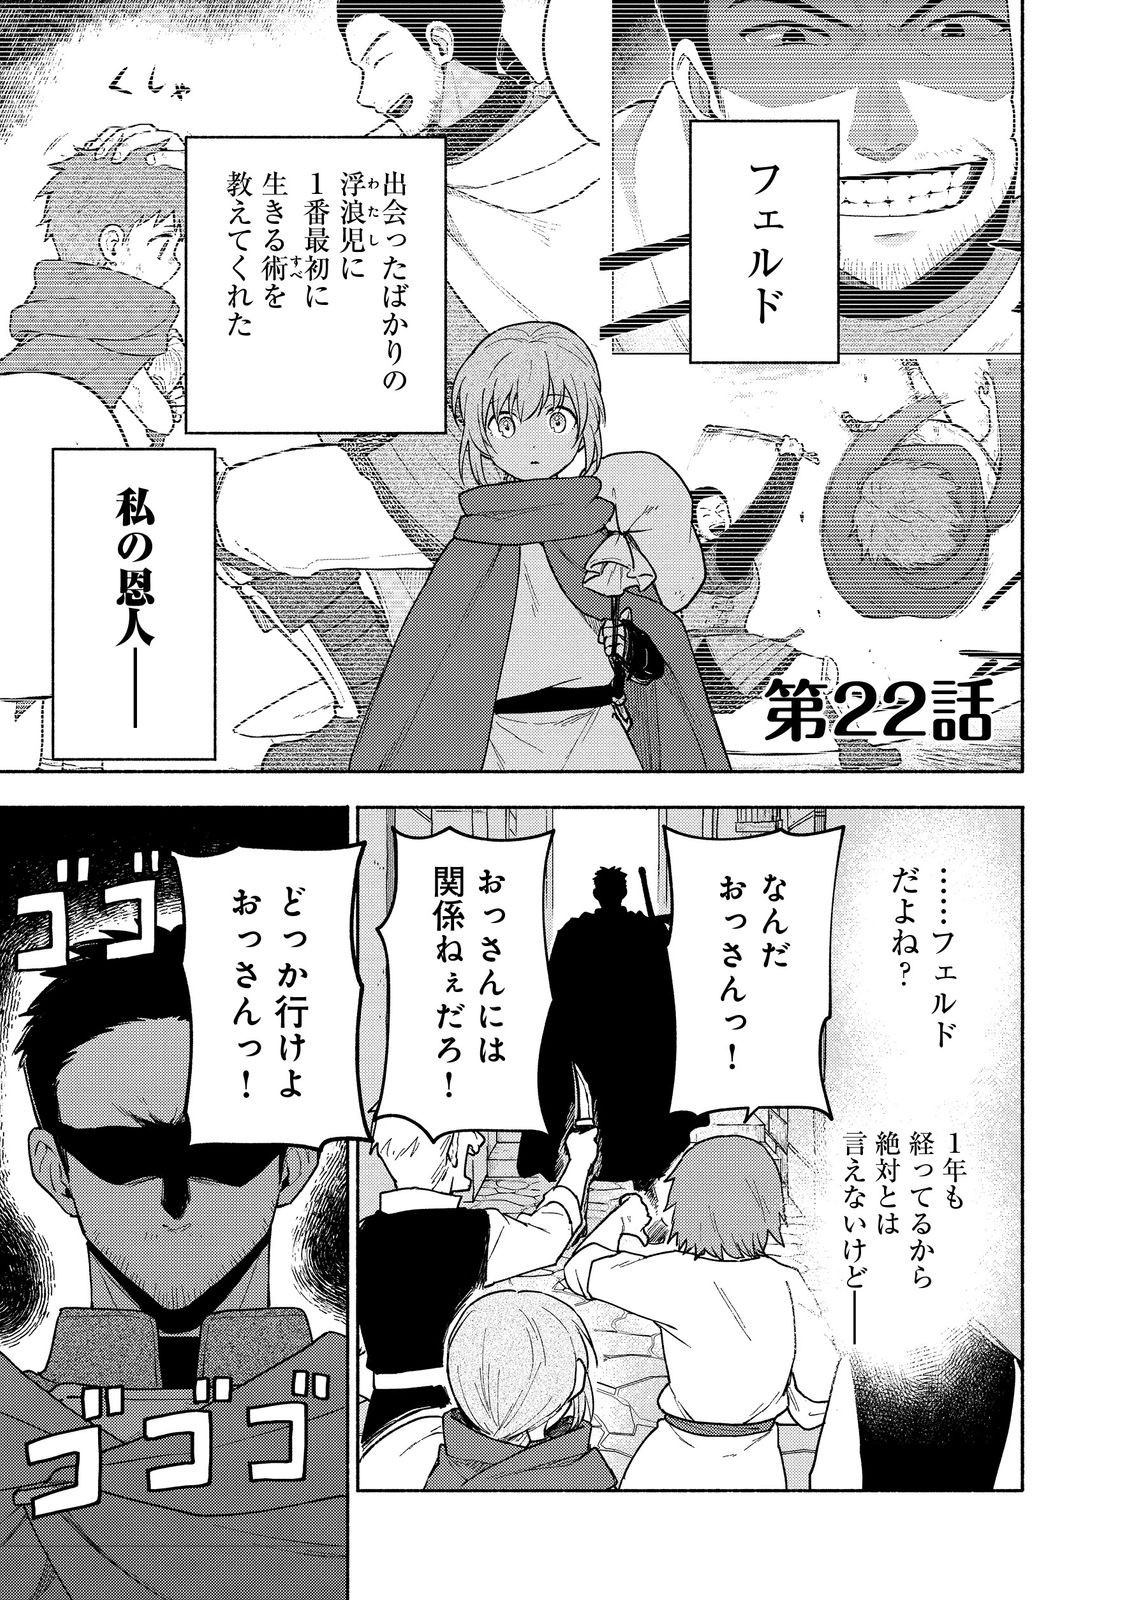 Otome Game no Heroine de Saikyou Survival - Chapter 22 - Page 1